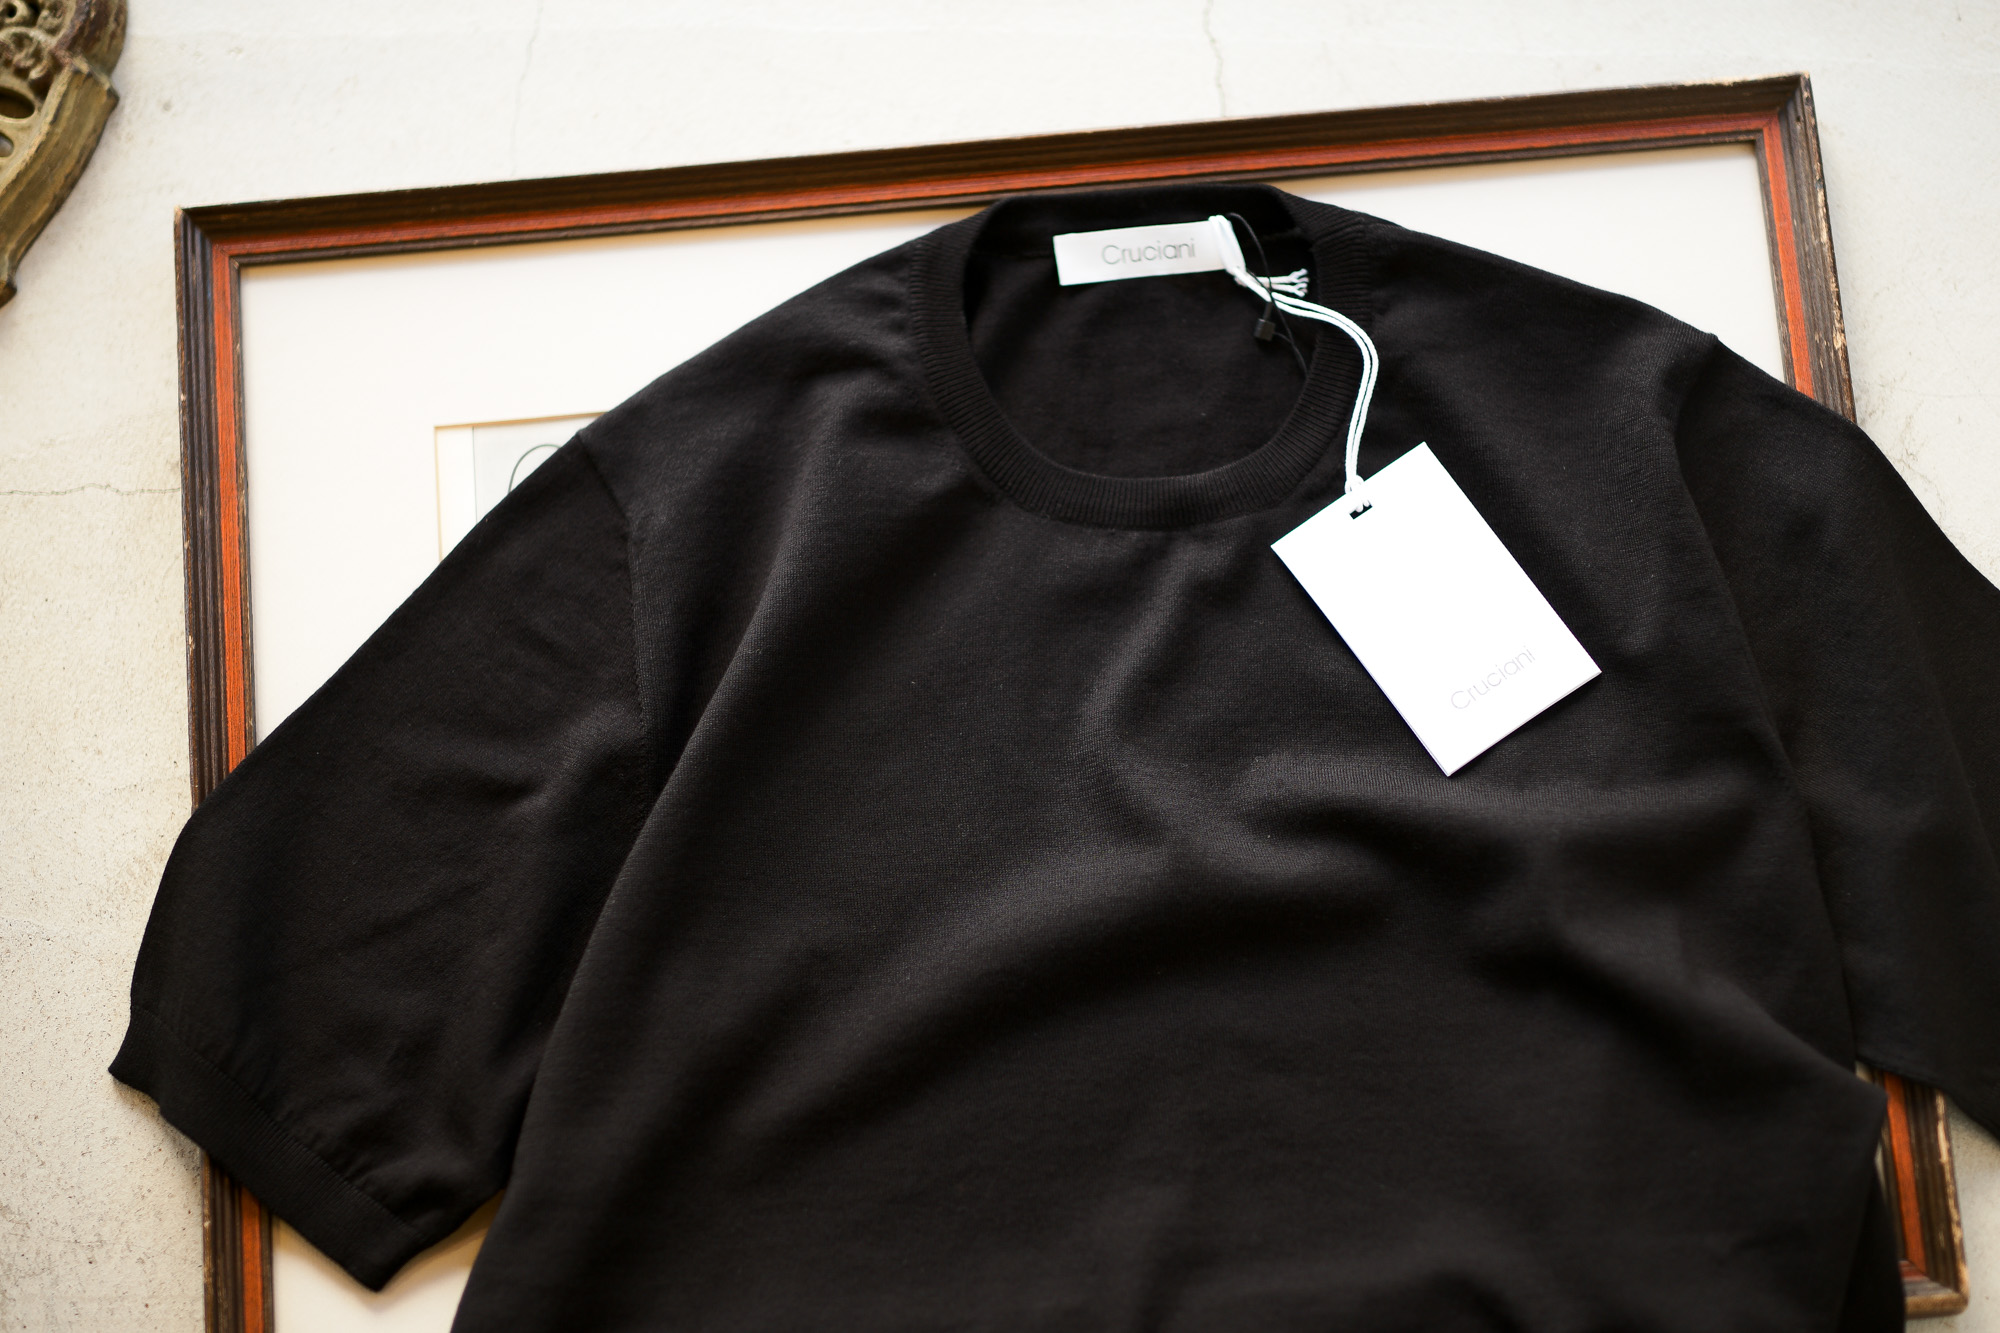 Cruciani(クルチアーニ) 33G Knit T-shirt 33ゲージ コットン ニット Tシャツ BLACK (ブラック・Z0048)  made in italy (イタリア製) 2020 春夏新作 愛知 名古屋 altoediritto アルトエデリット ニットTEE